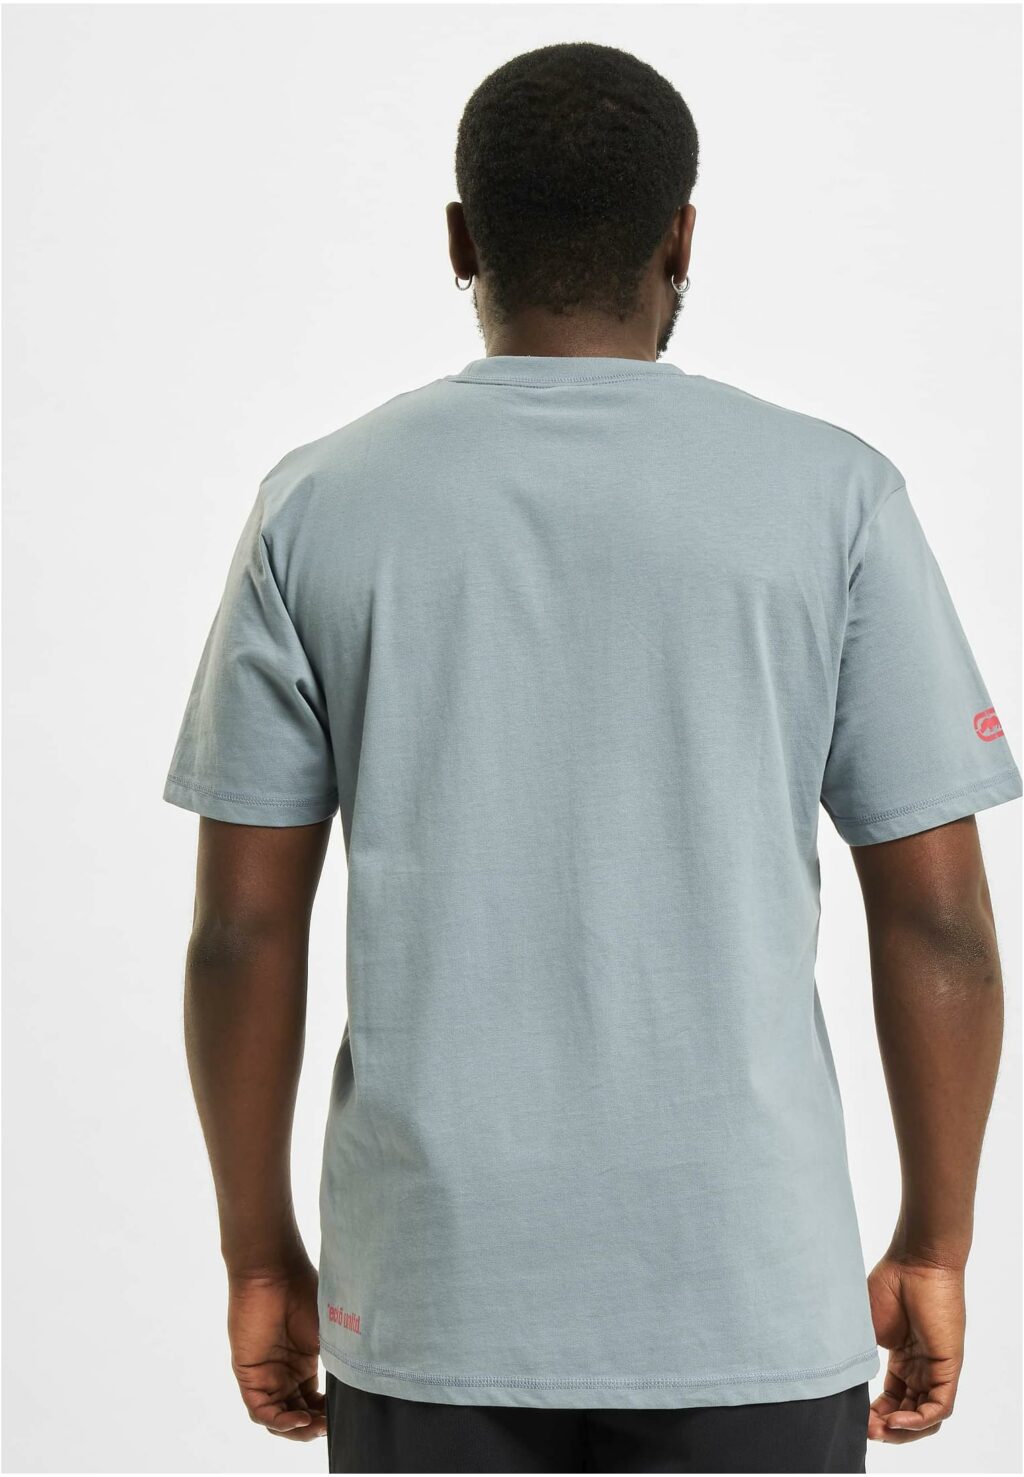 Base T-Shirt grey ECKOTS1055